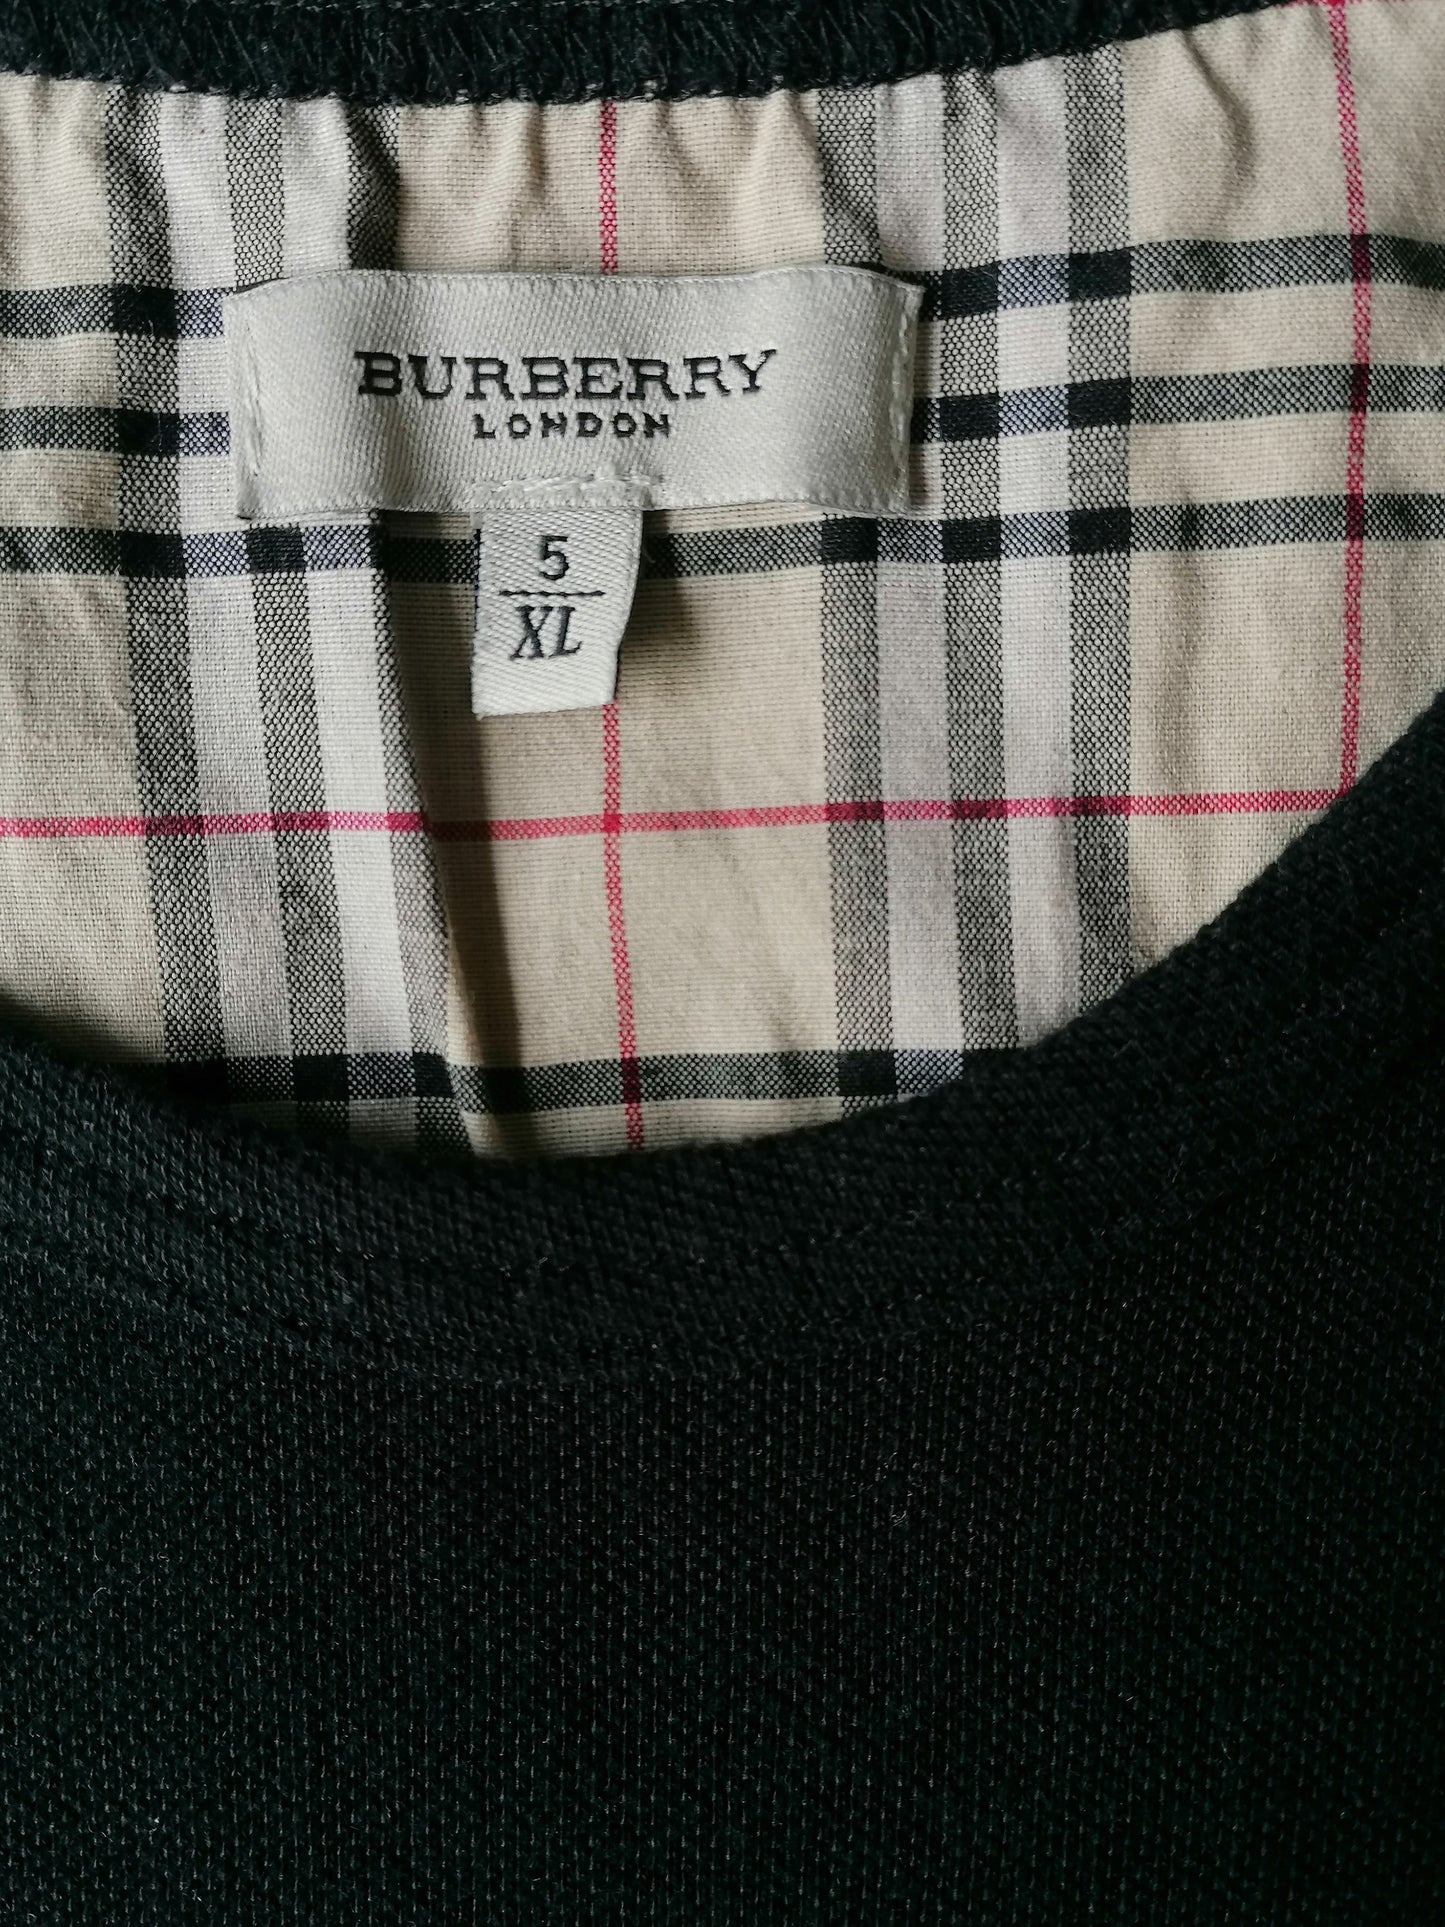 Vintage Burberry Cotton Spencer. Color negro. Tamaño xl.